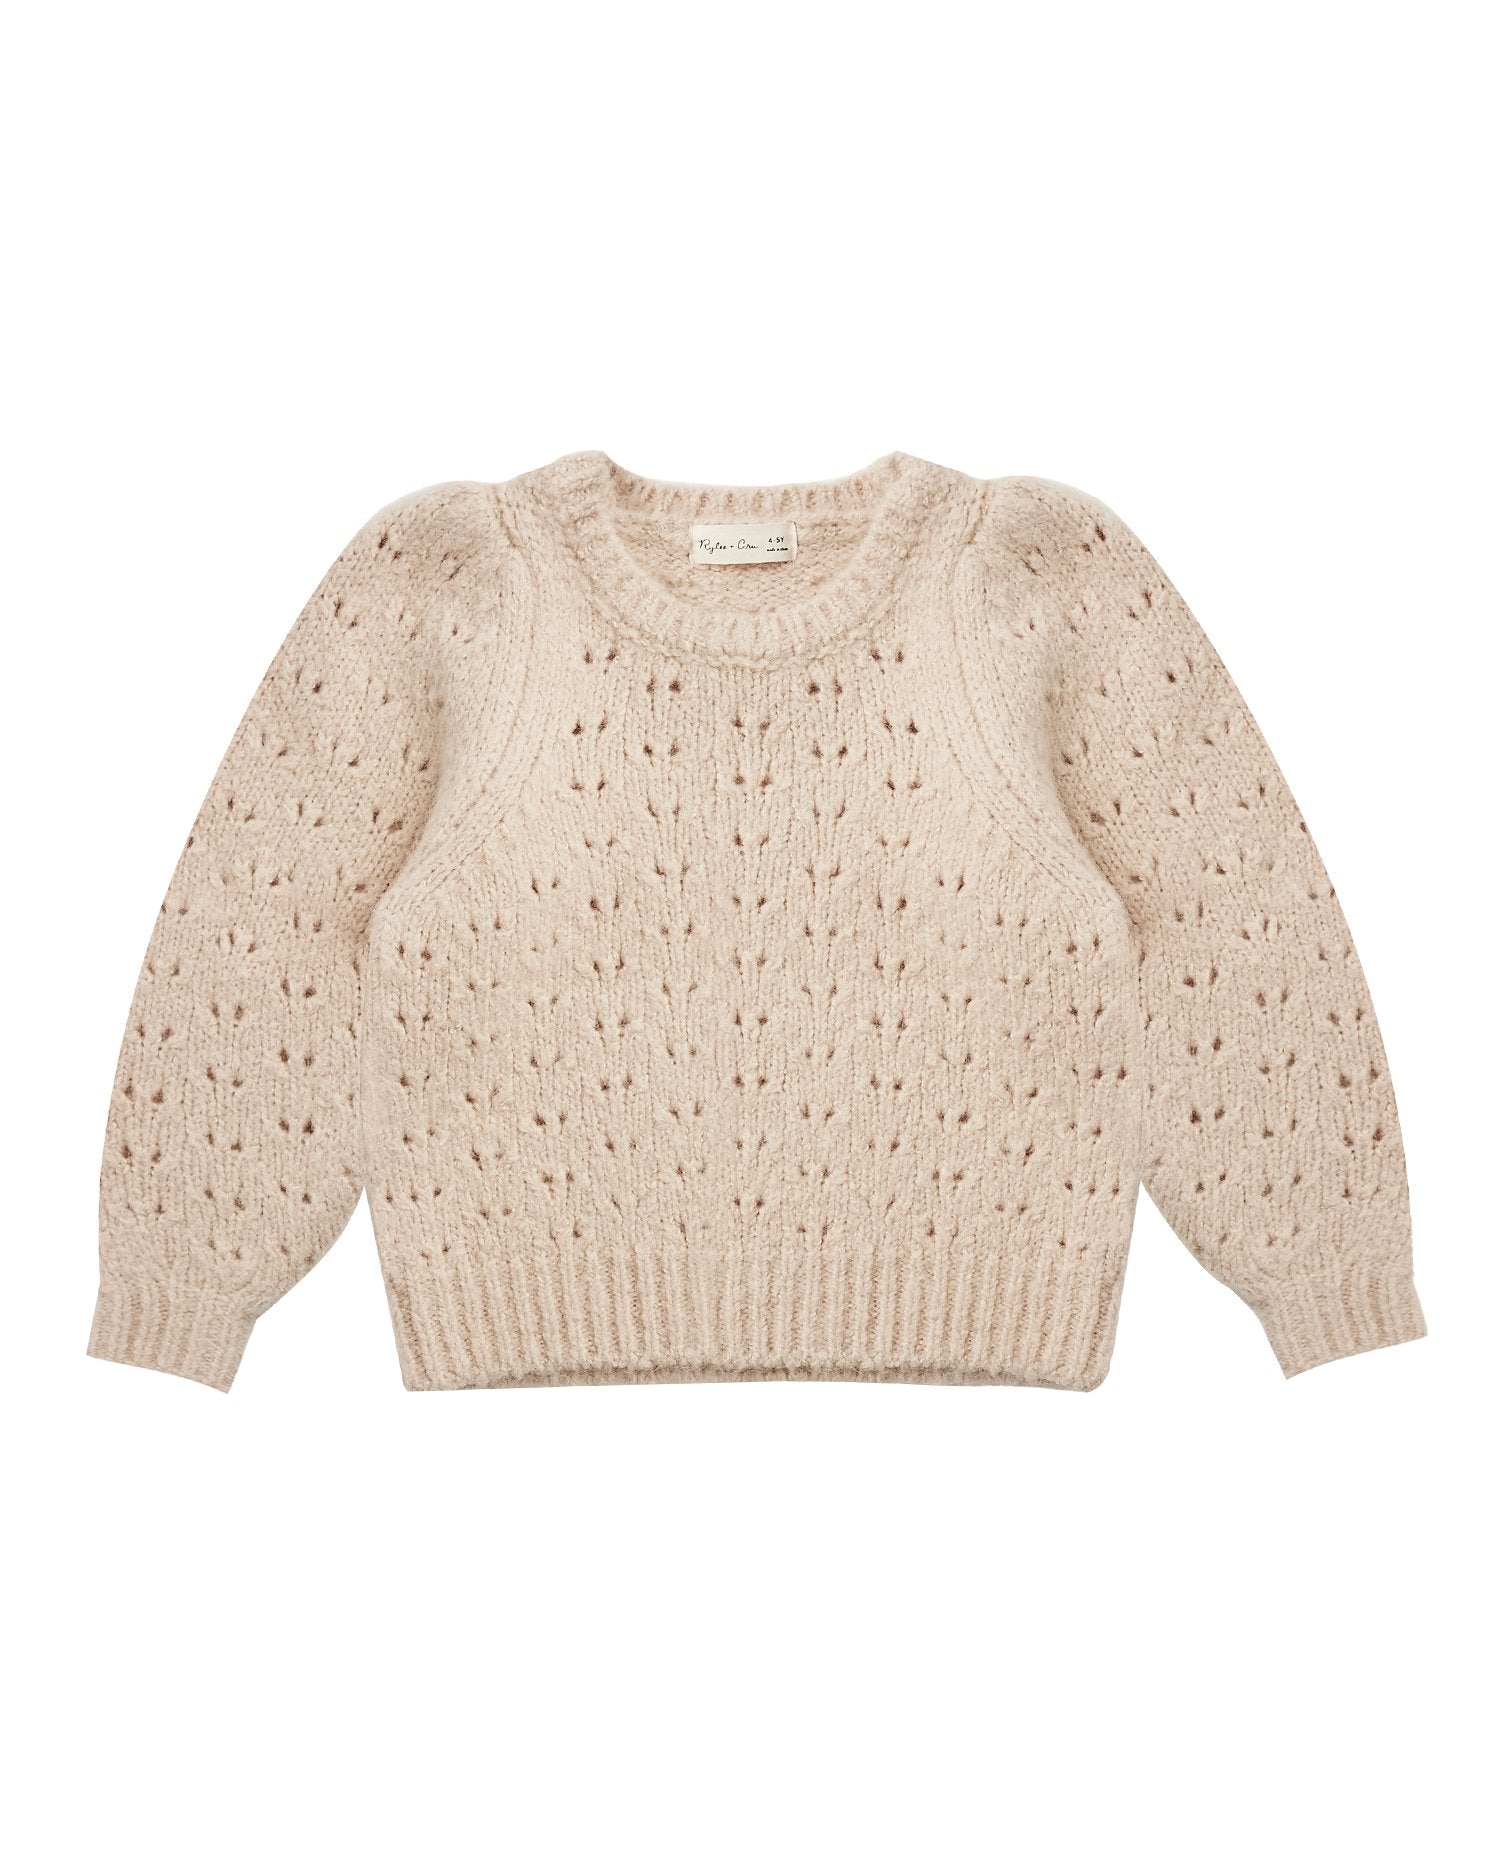 ANOMIE: Balloon Sweater – Beige Knit | Rylee + Cru